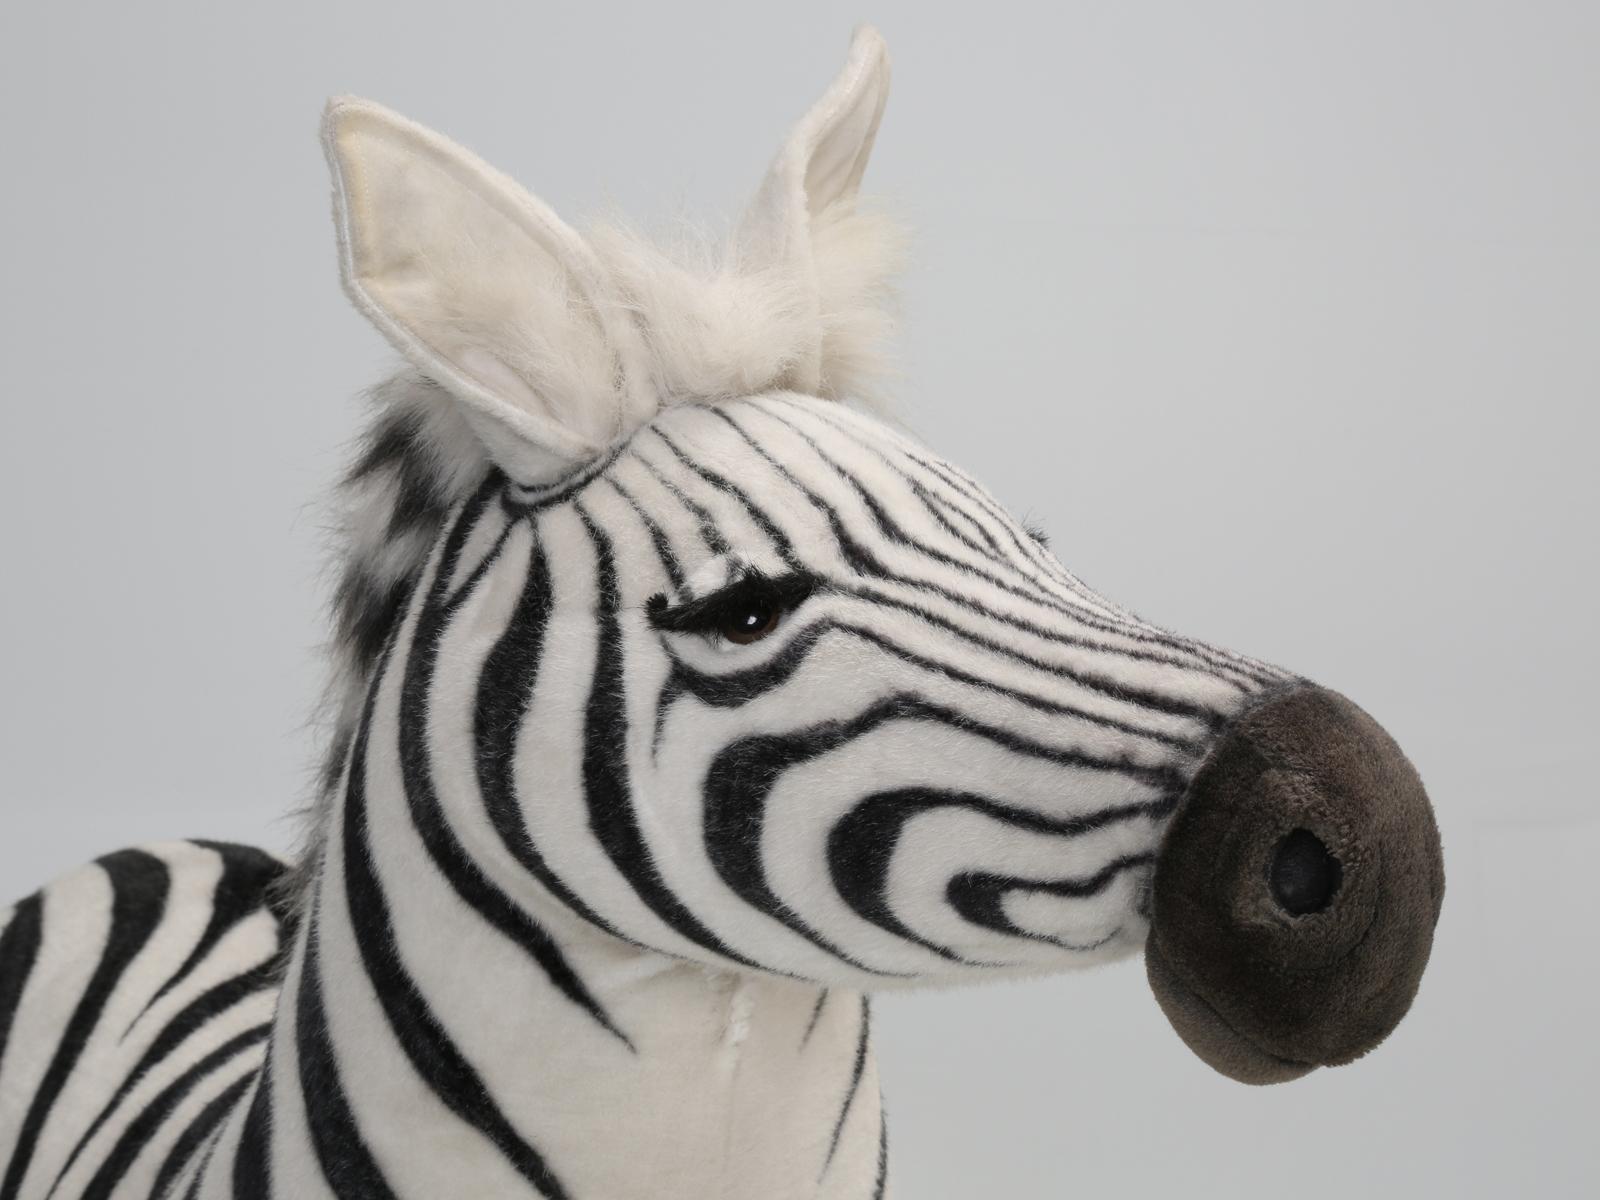 life size zebra stuffed animal